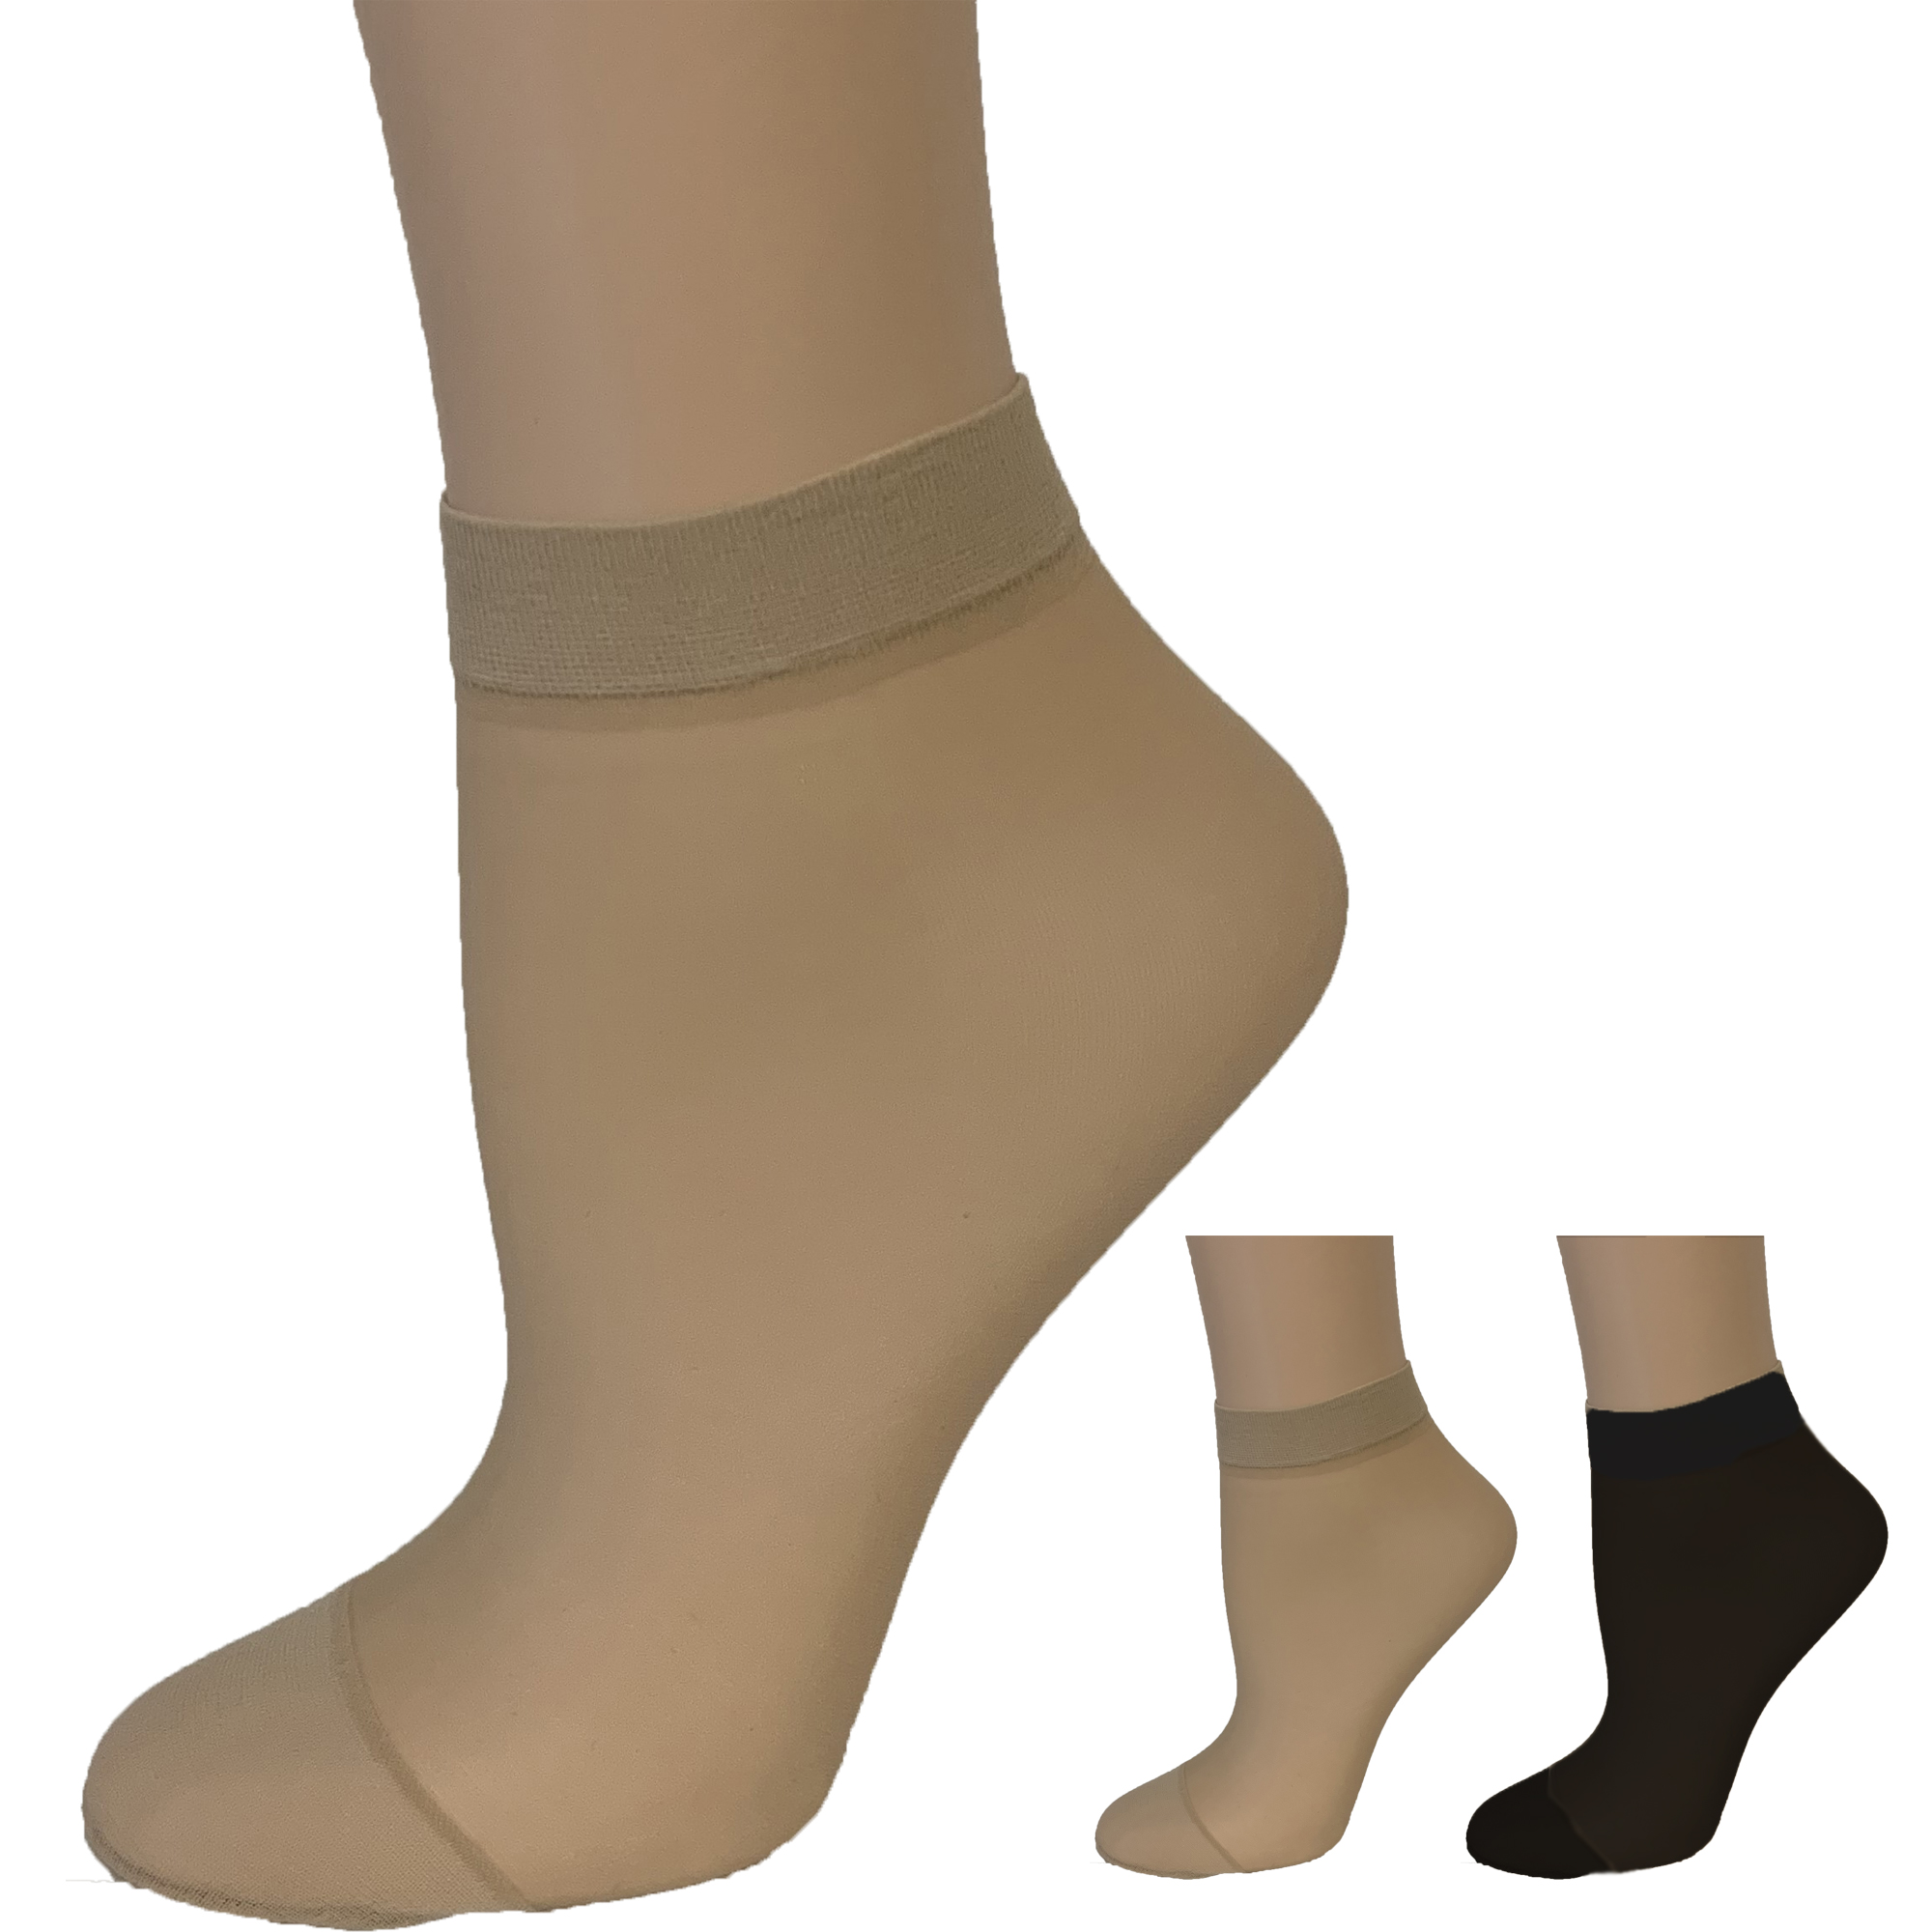 Men & Women's Disposable Ankle Sheer SOCKS w/ Reinforced Toe